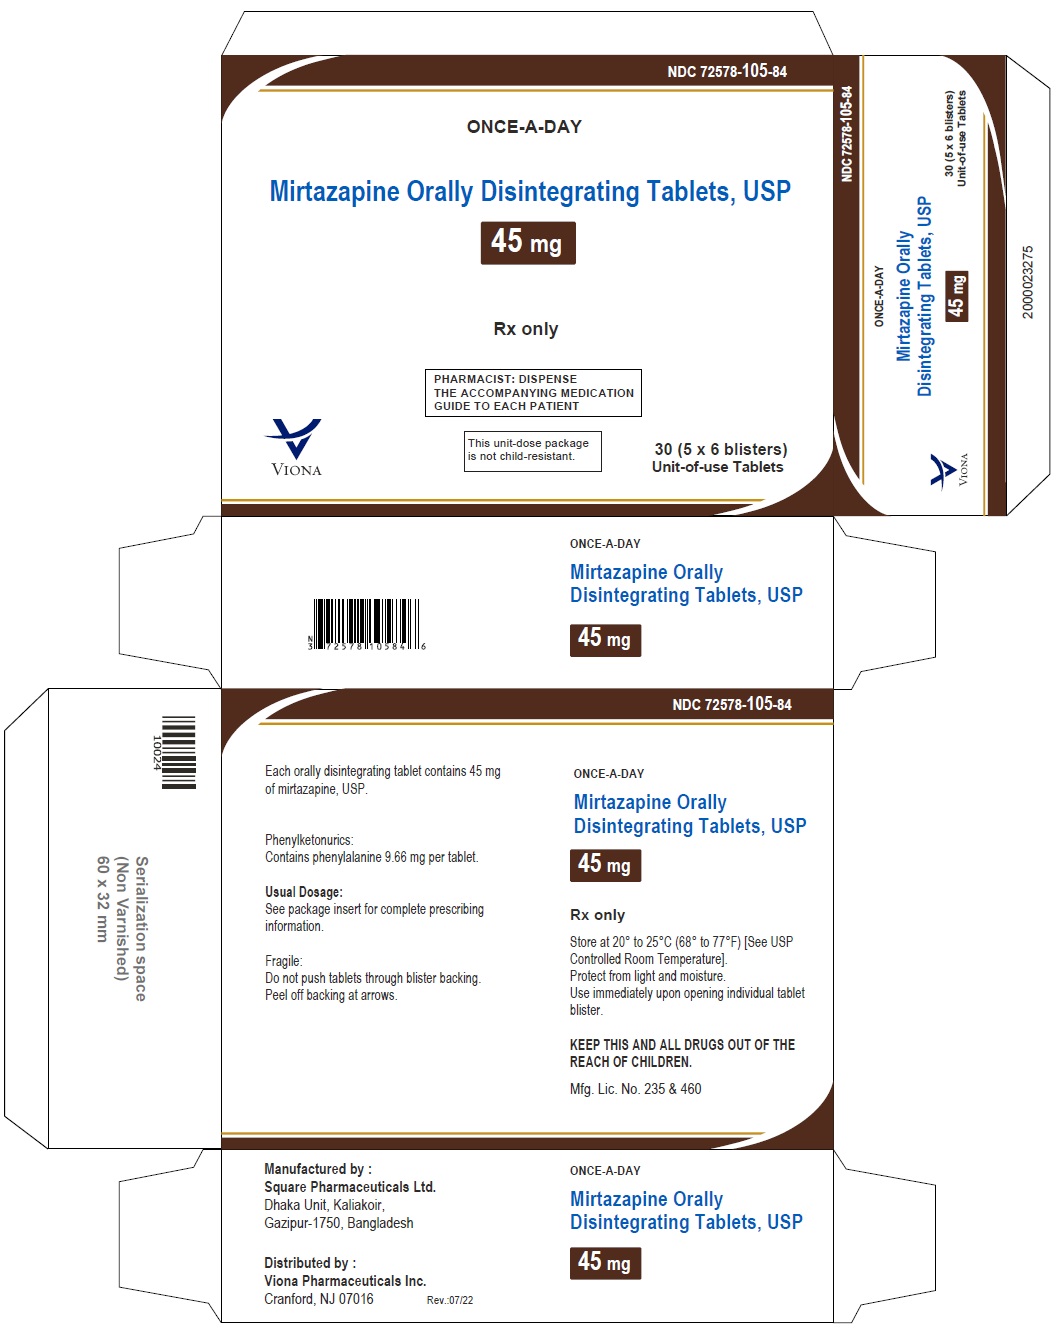 Mirtazapine orally disintegrating tablets USP, 45 mg